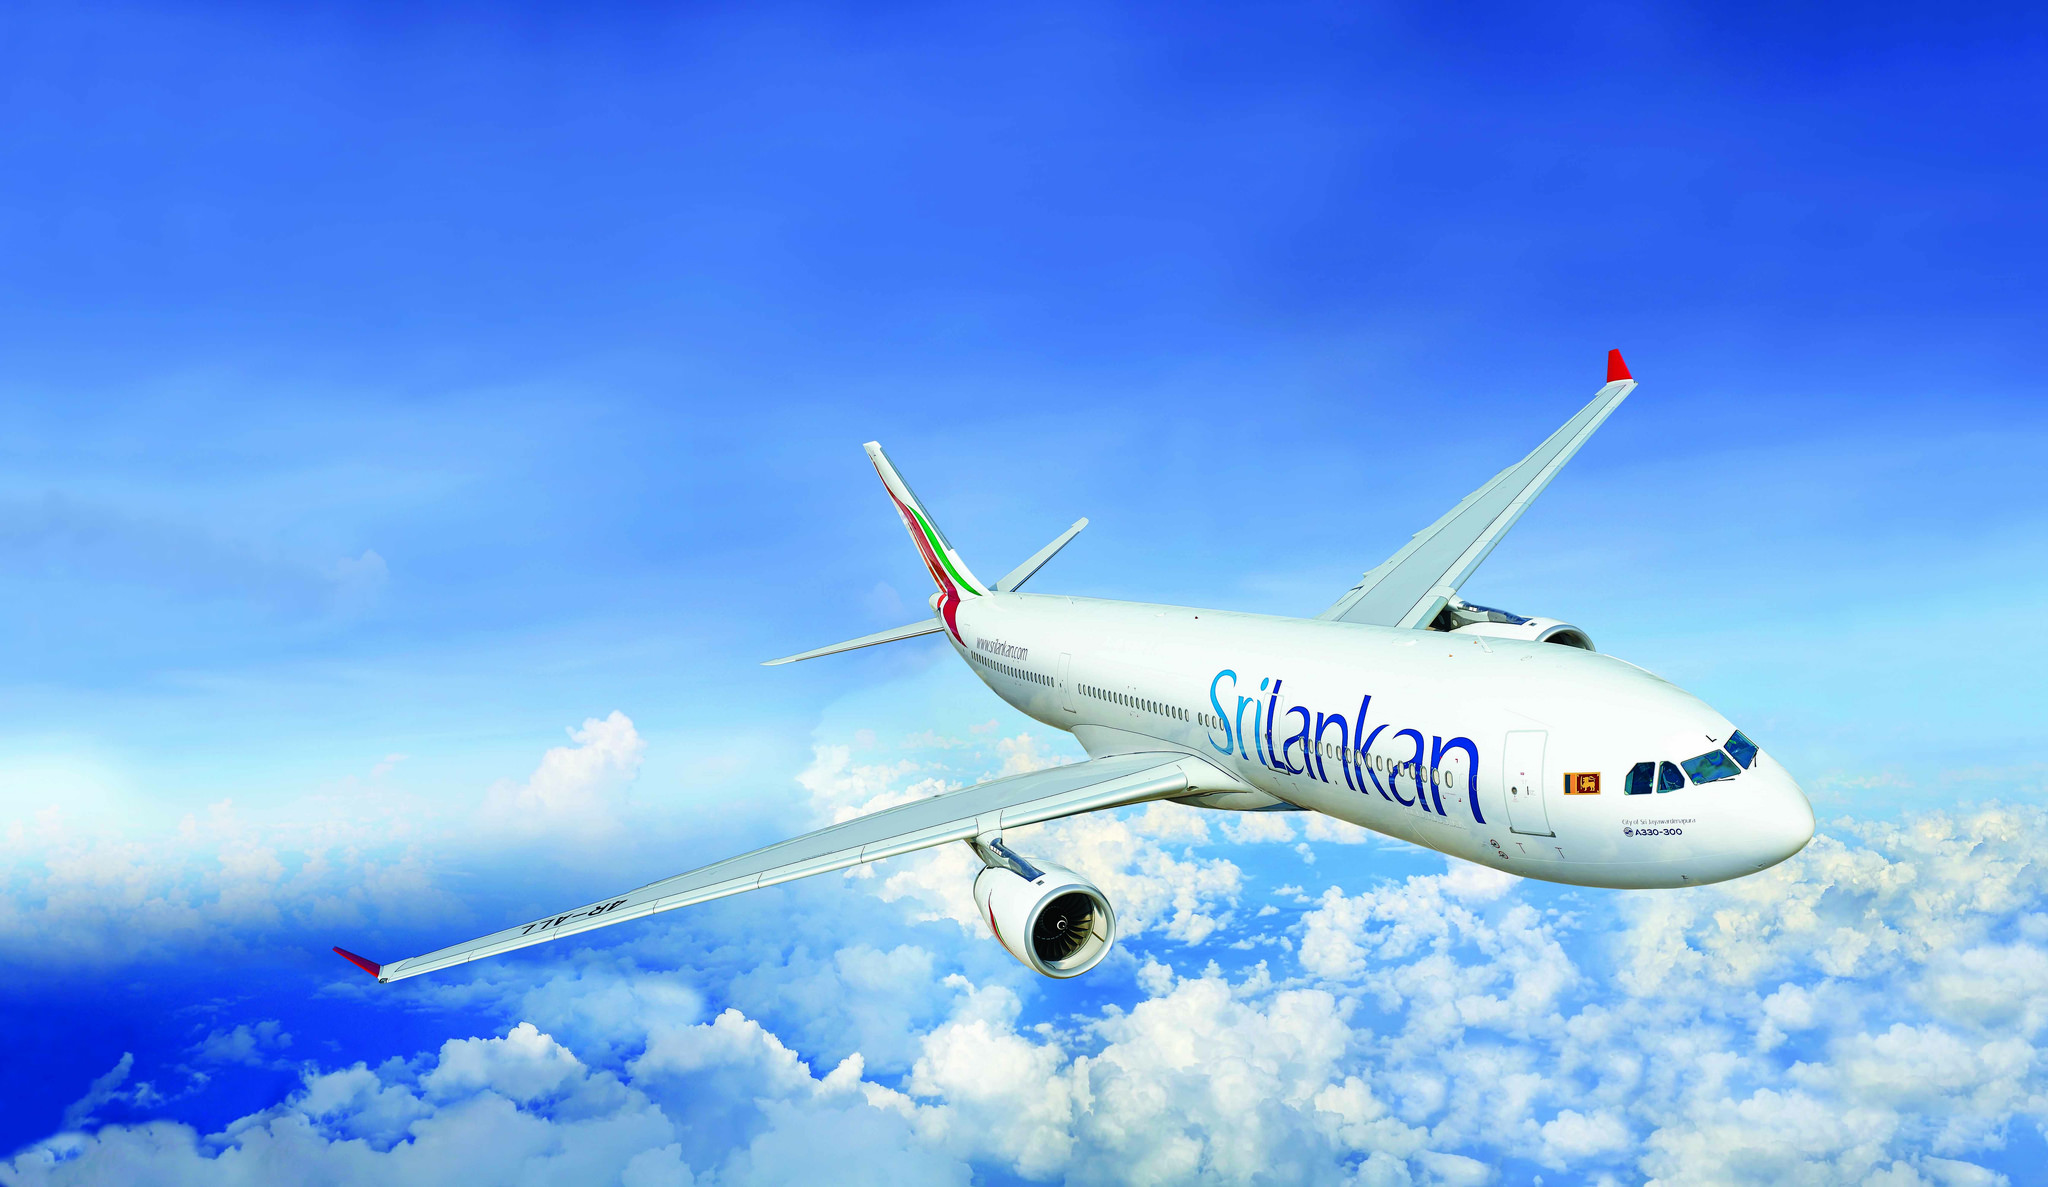 Stowaway rat grounds SriLankan Airlines flight, raises investor concerns